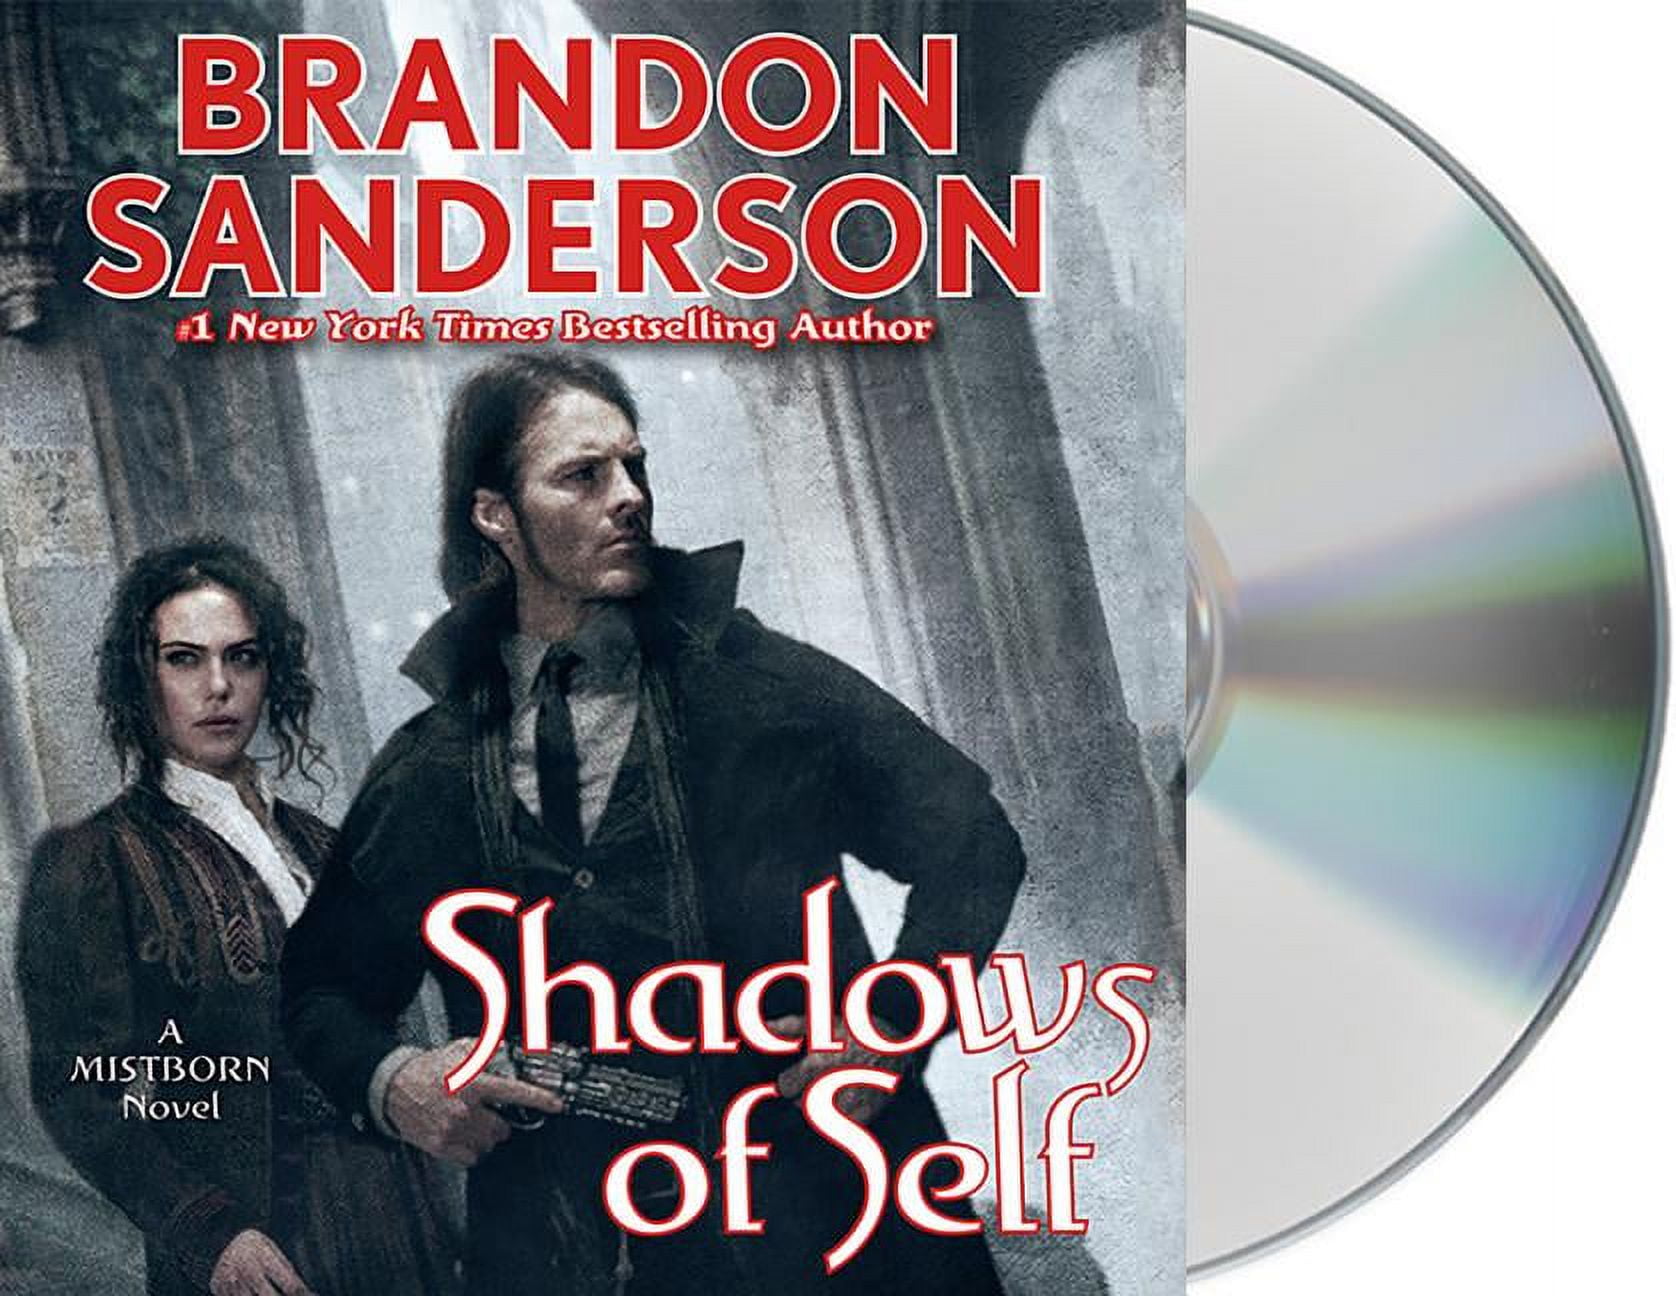 Shadows of Self (Mistborn, #5) by Brandon Sanderson